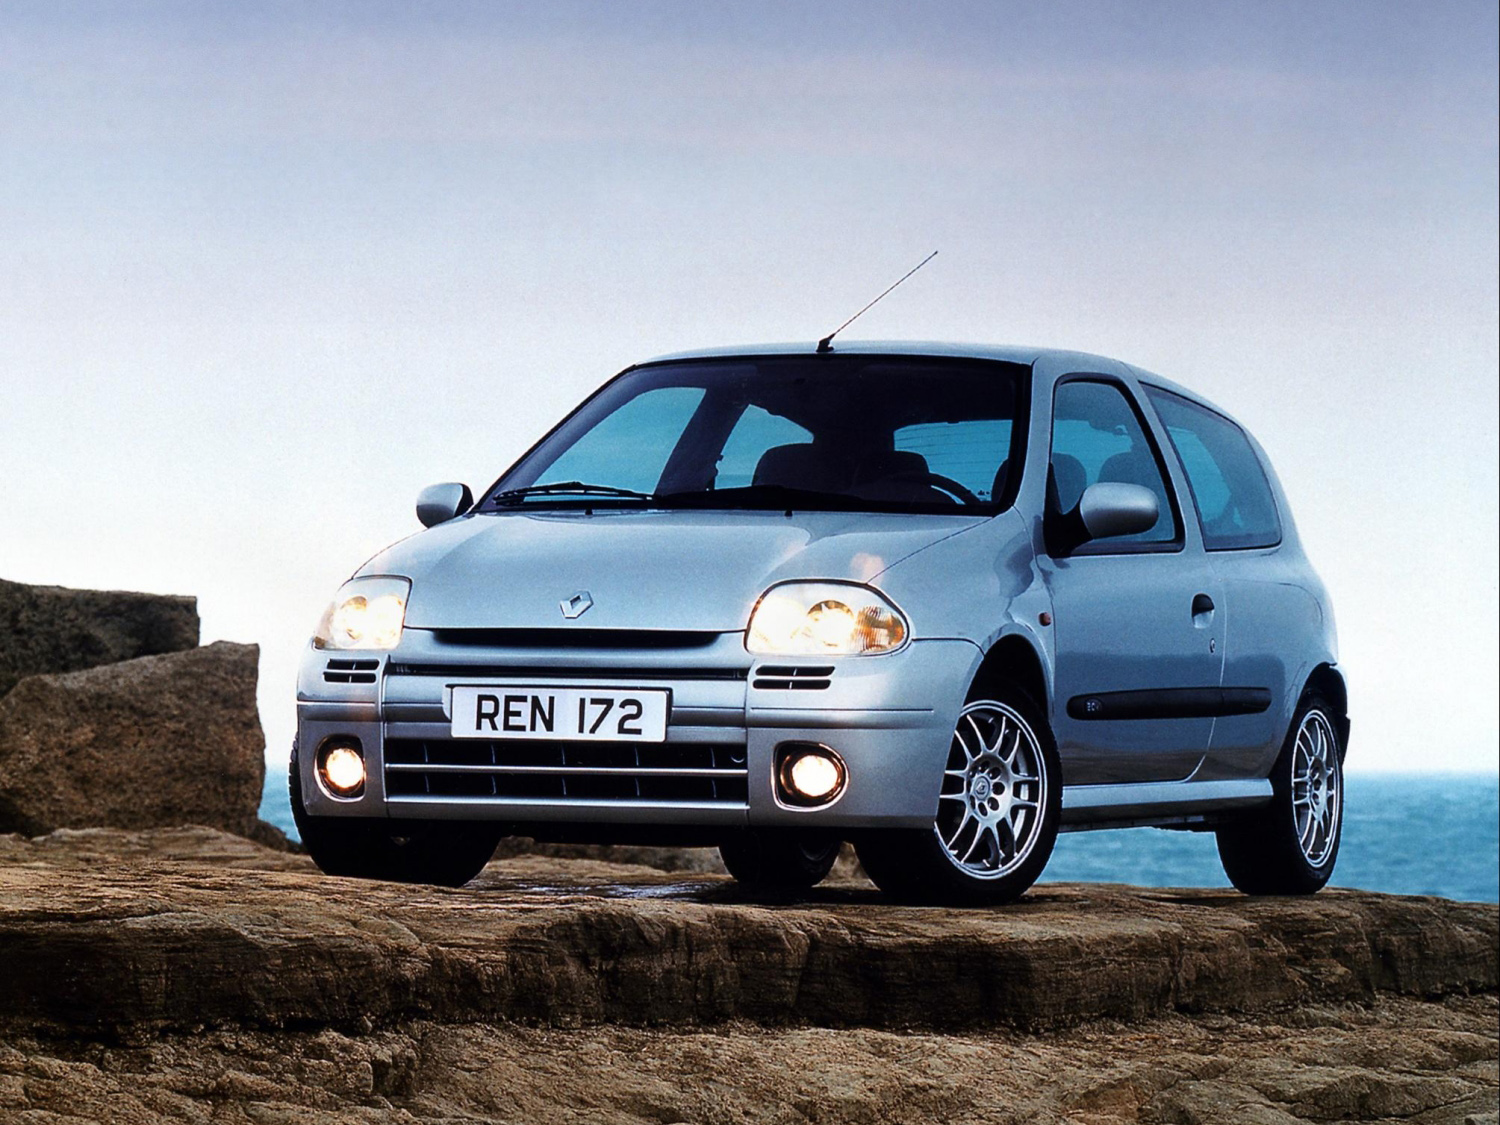 1998 Renault Sport Clio 172 Static Outdoor Shot